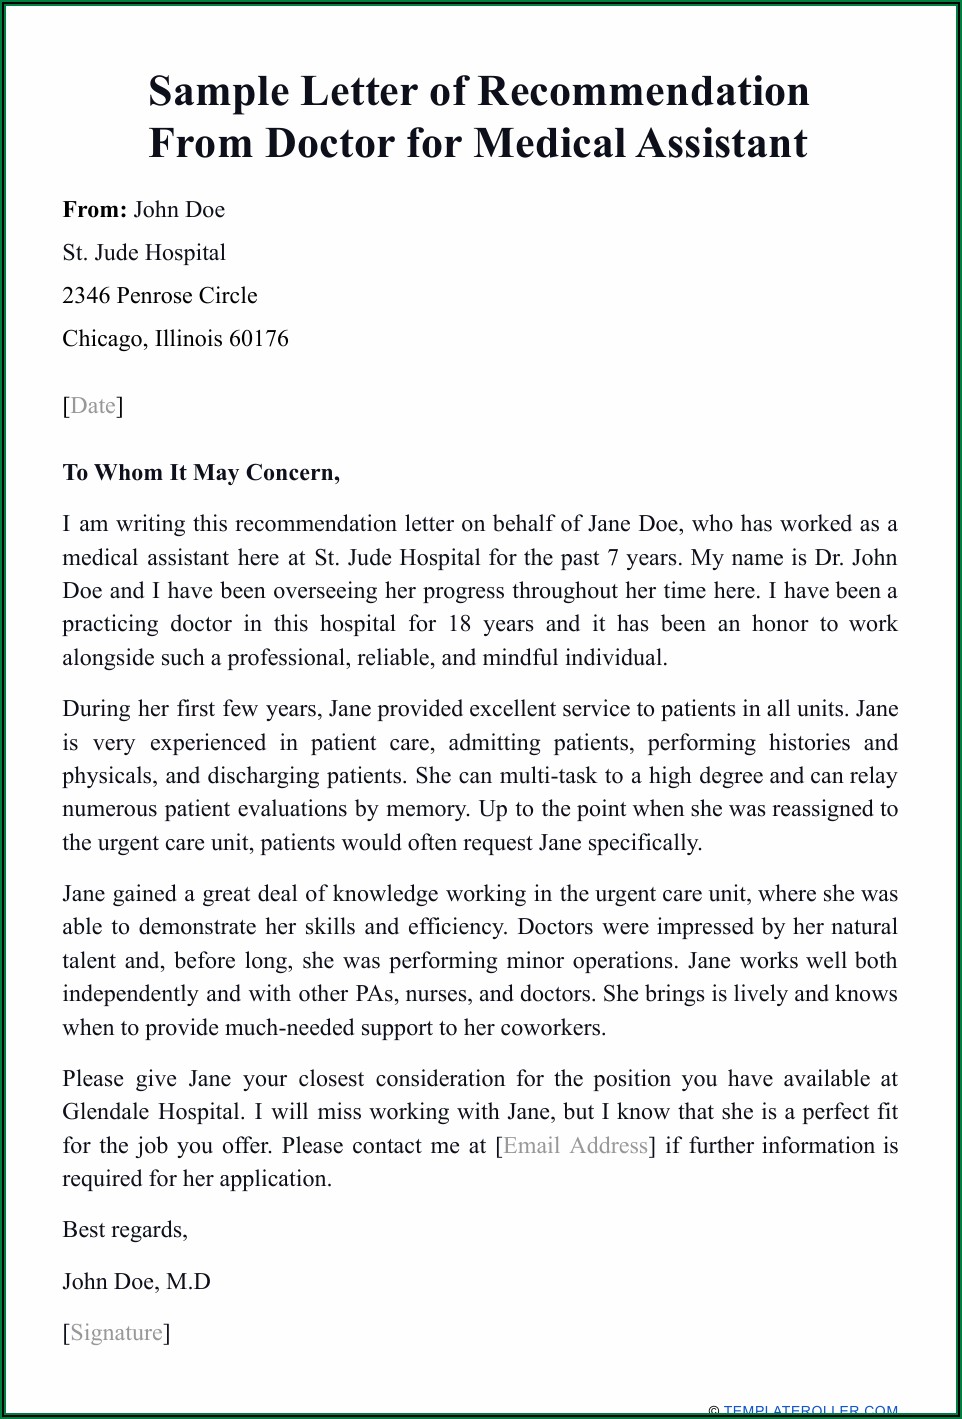 Sample Letter Of Recommendation For Medical Administrative Assistant